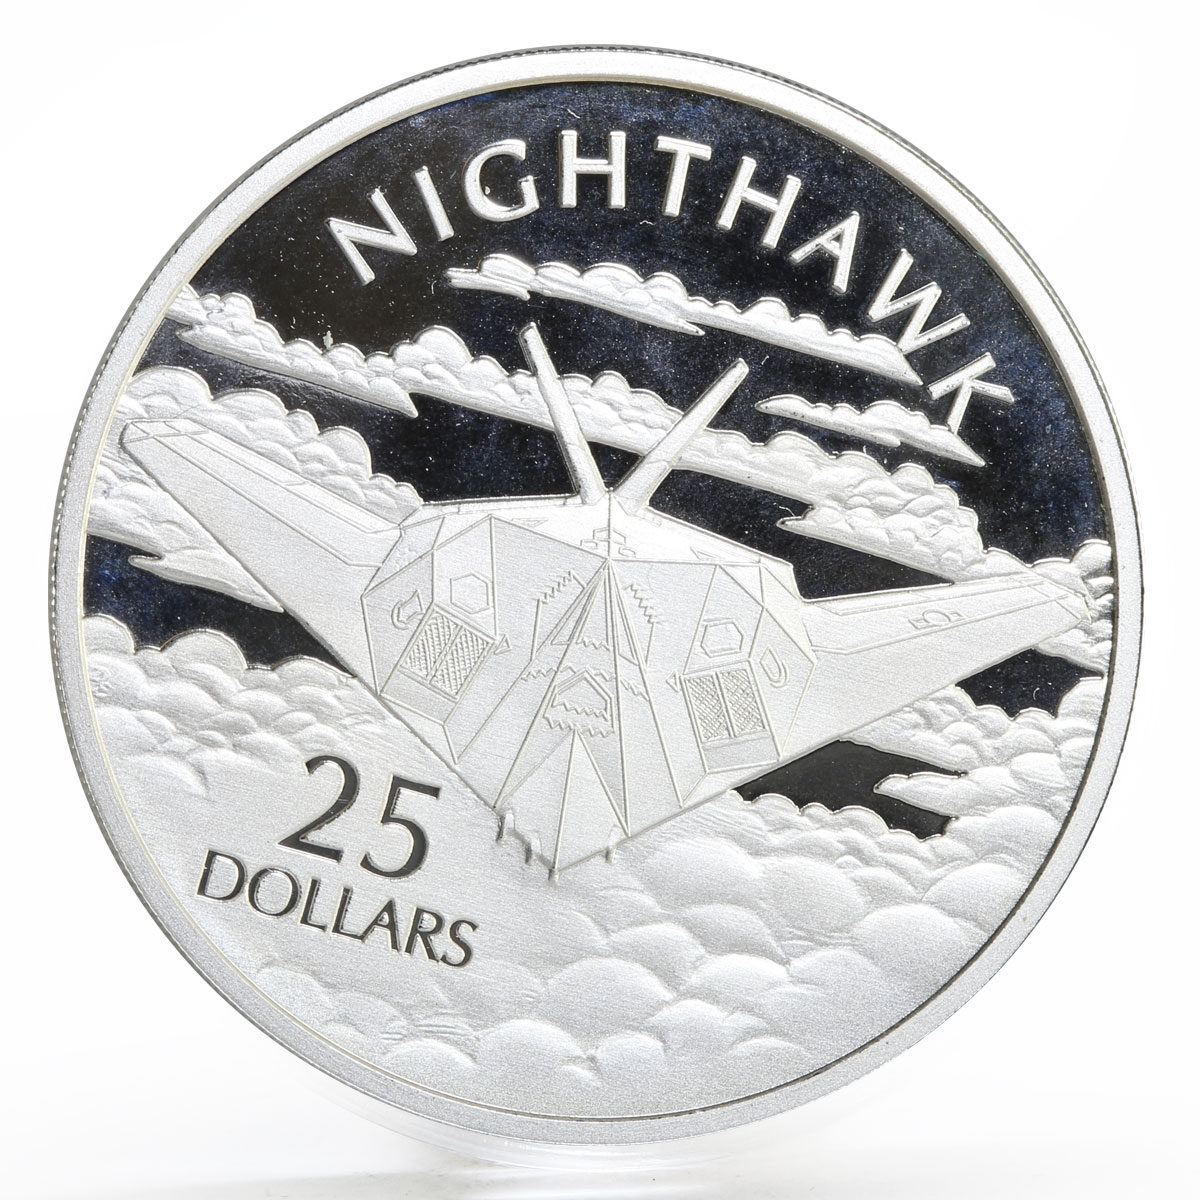 Solomon Islands 25 dollars Aircraft series F-117 Nighthawk silver coin 2003